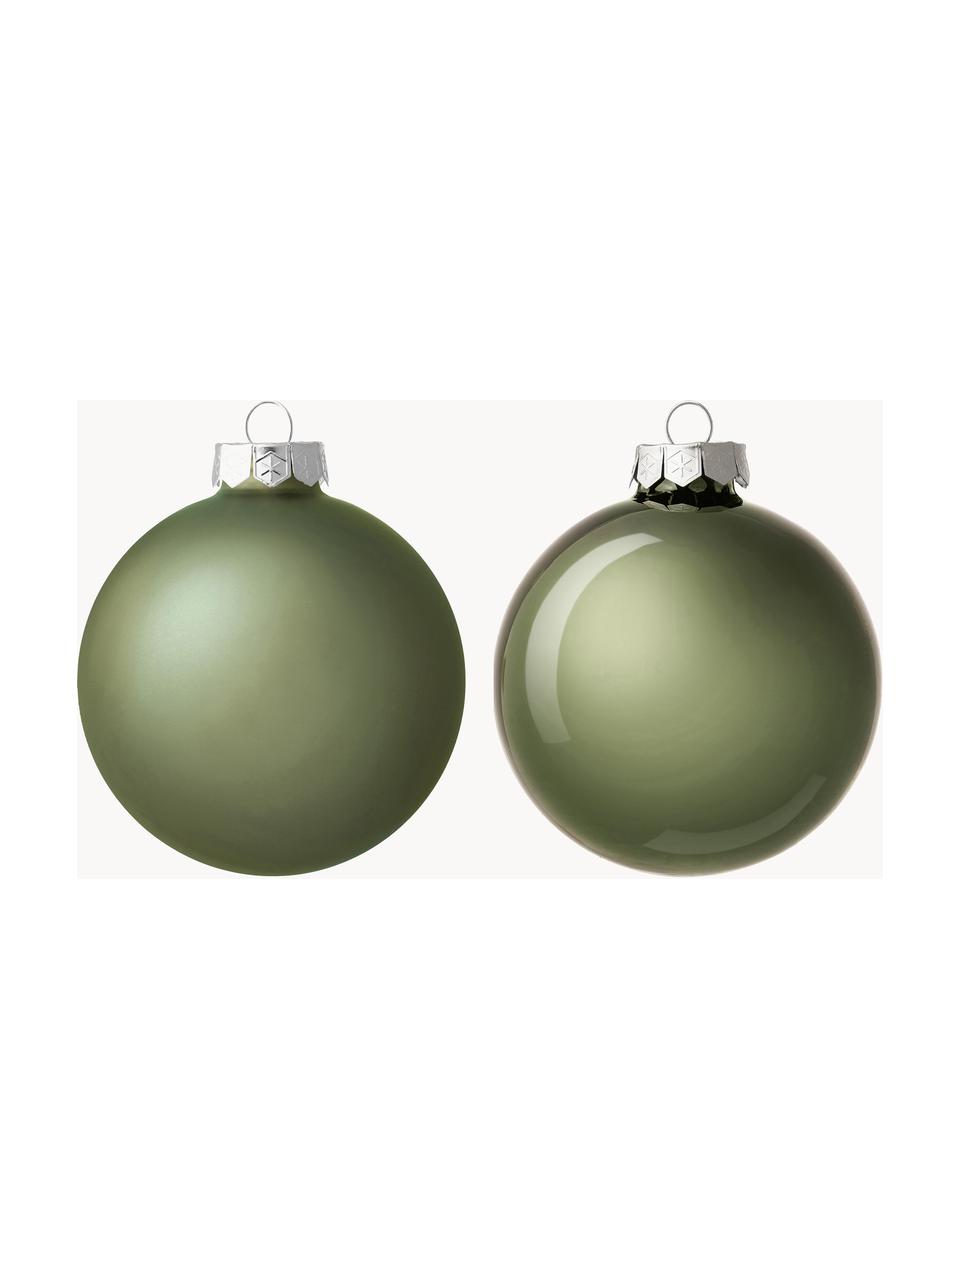 Weihnachtskugeln Evergreen matt/glänzend, verschiedene Größen, Salbeigrün, Ø 8 cm, 6 Stück